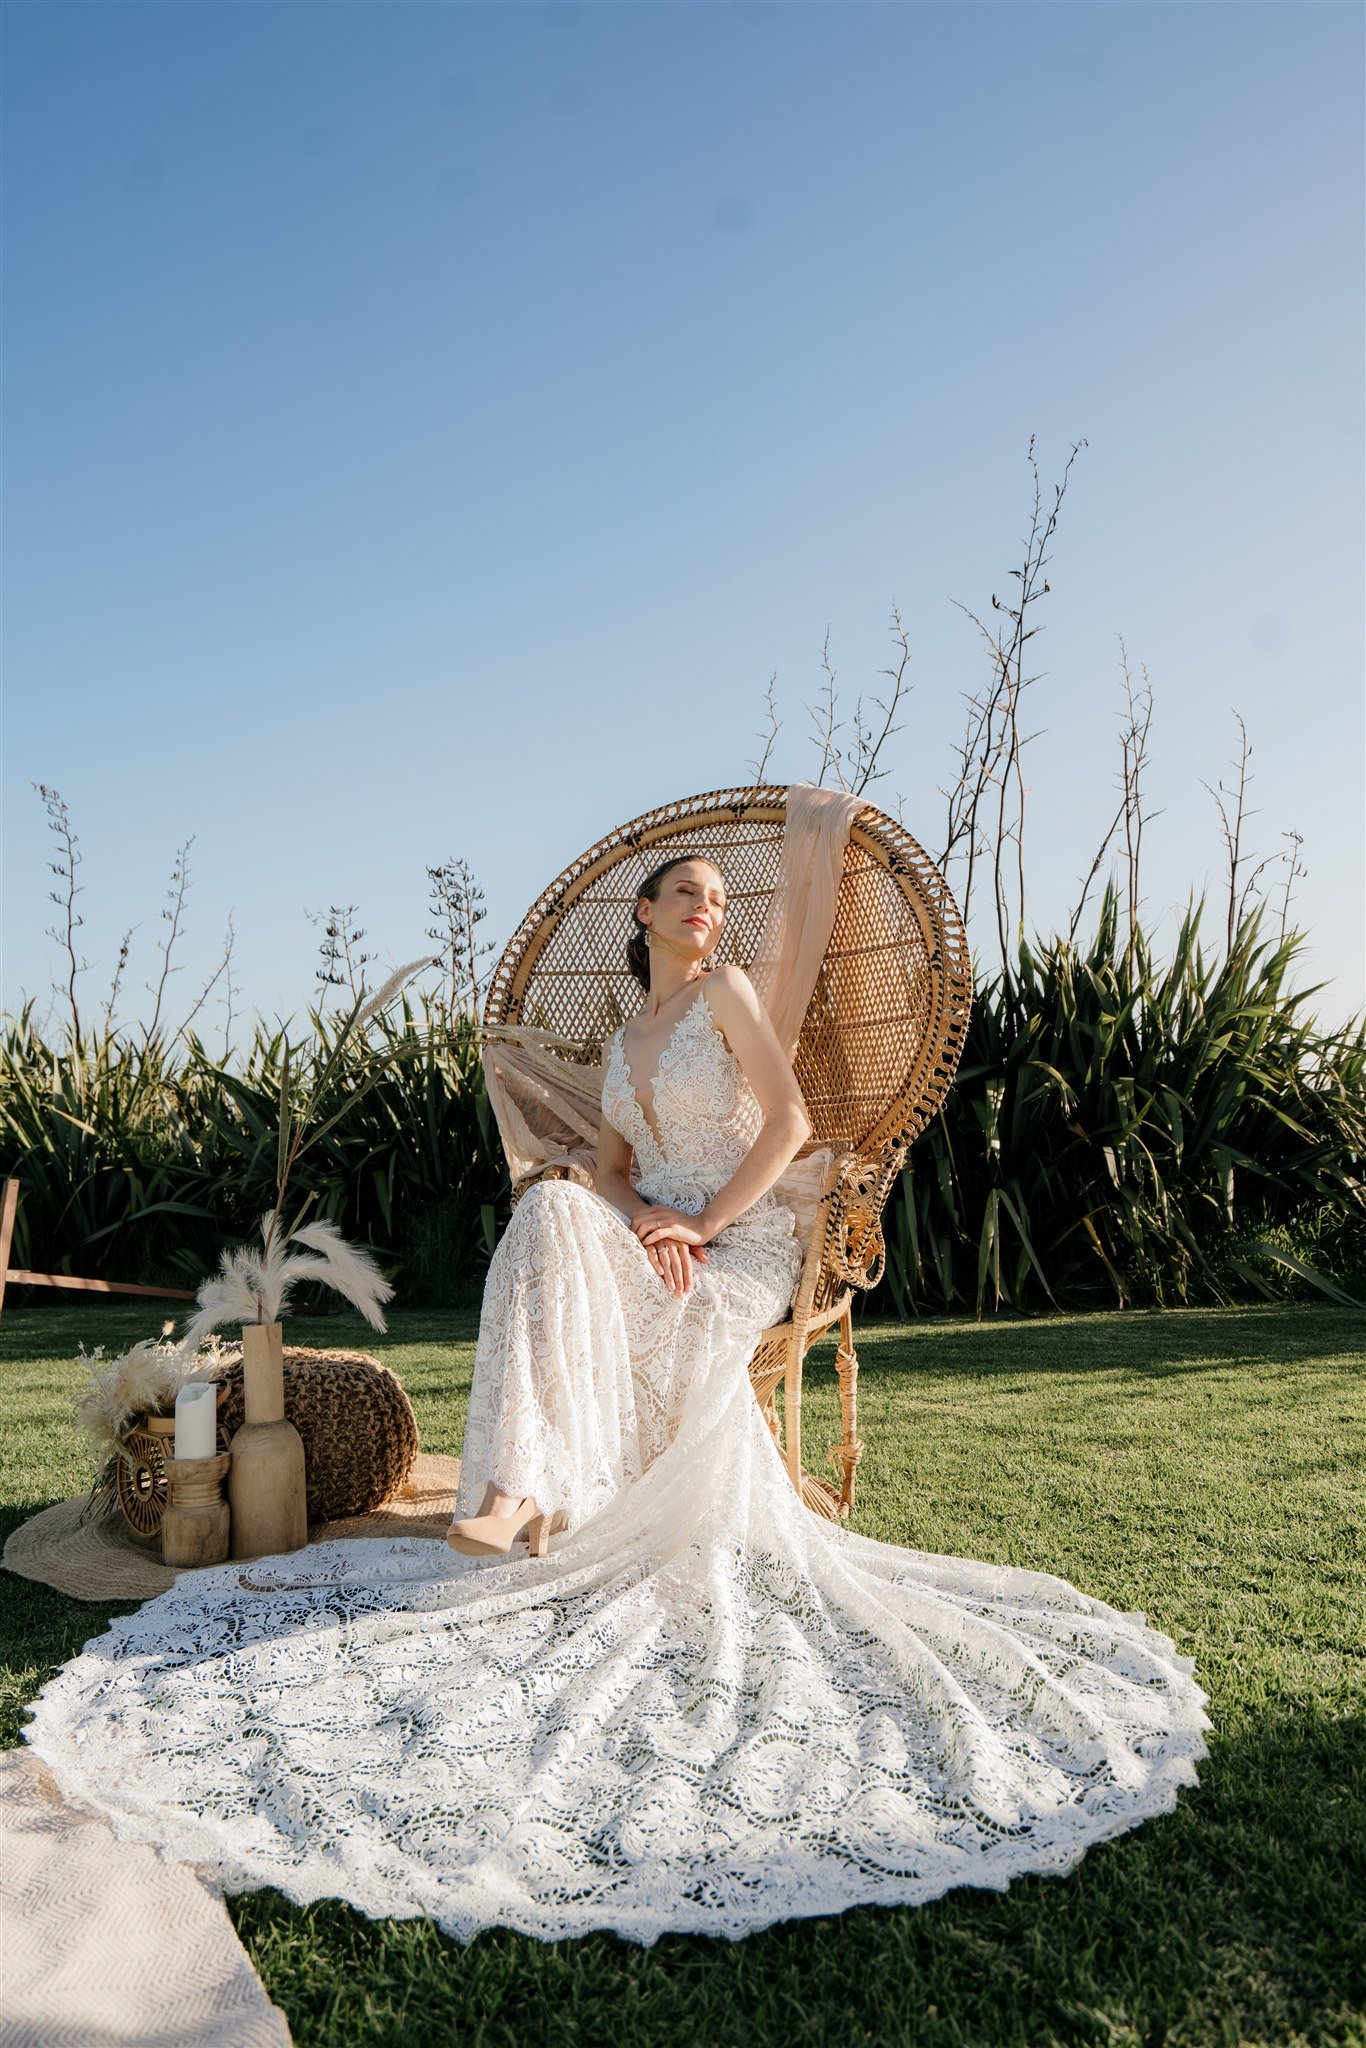 castaways-NZ-new-zealand-auckland-wedding-photographer-photography-videography-film-dear-white-productions-best-venue-waiuku-engagement-elopement-style-beach-intimate (288).jpg